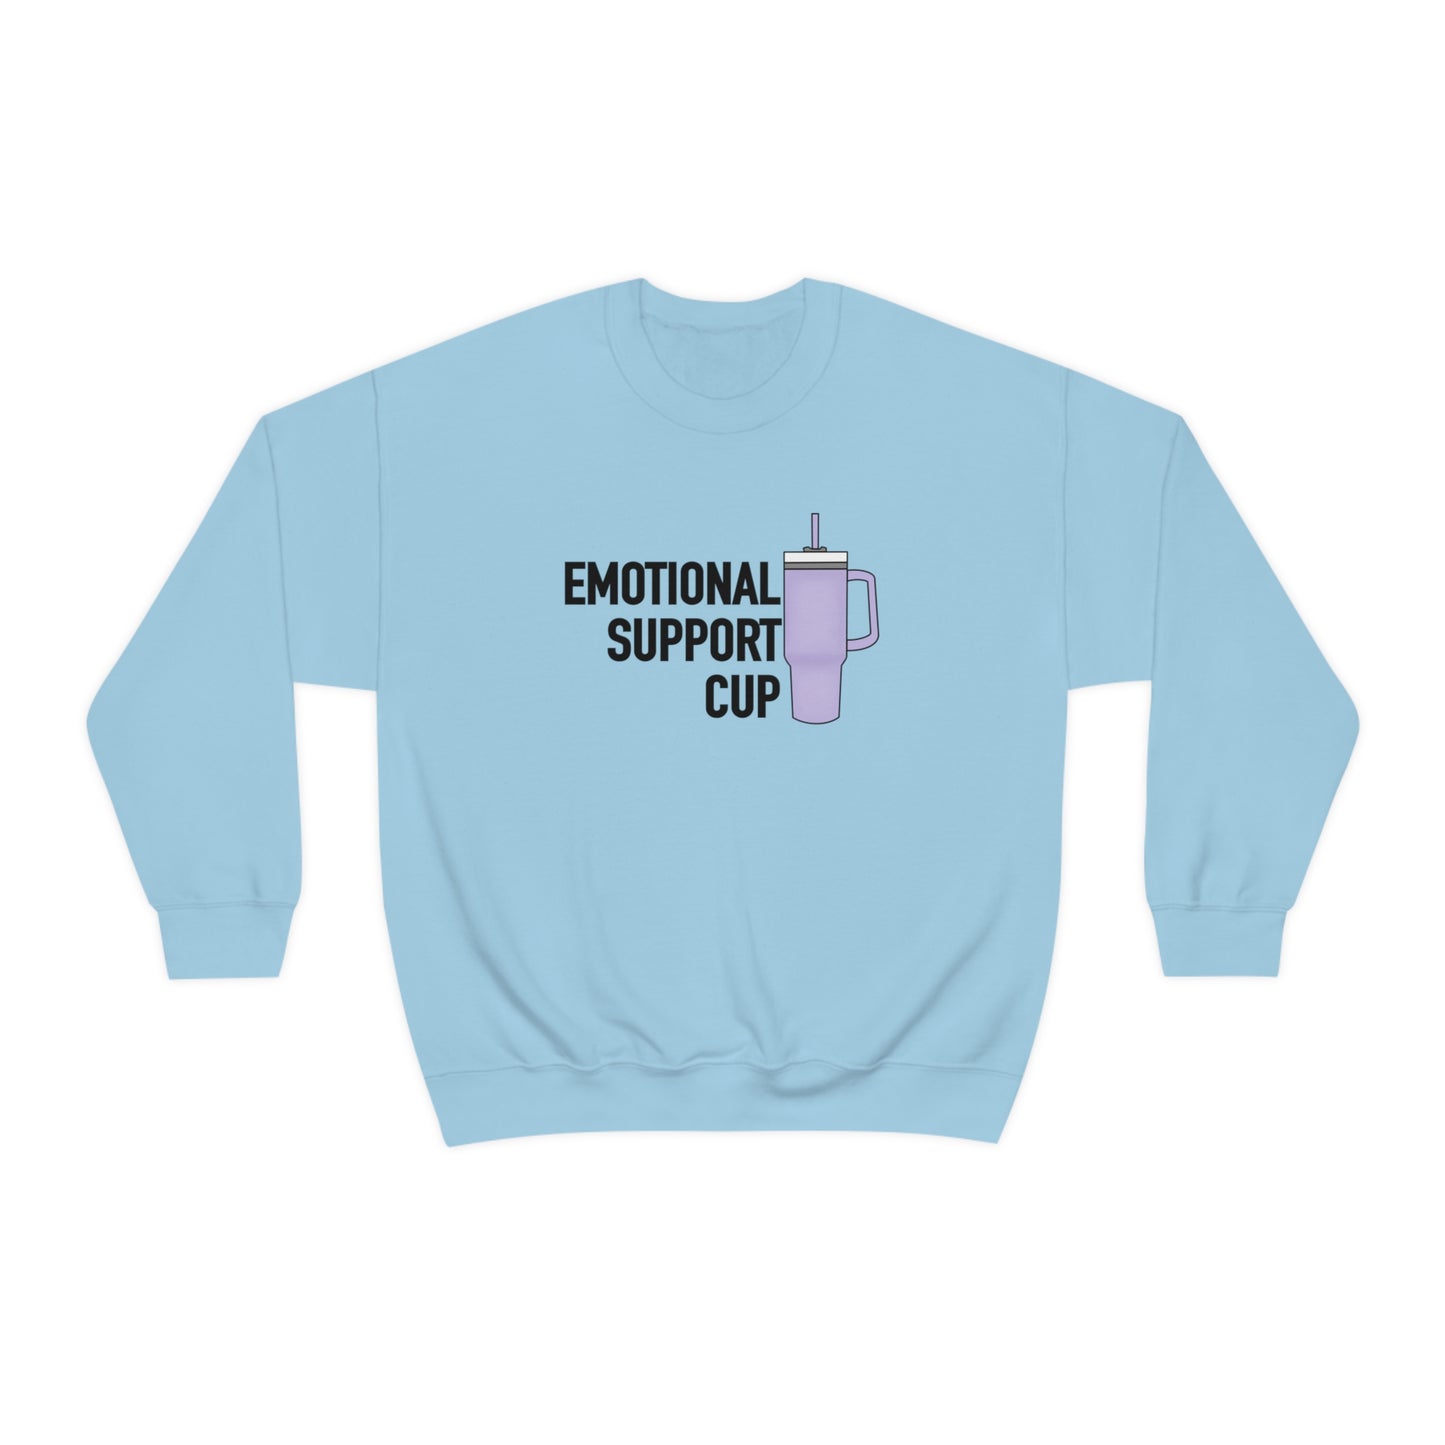 "Emotional Support Cup" Gildan Unisex Crewneck Sweatshirt